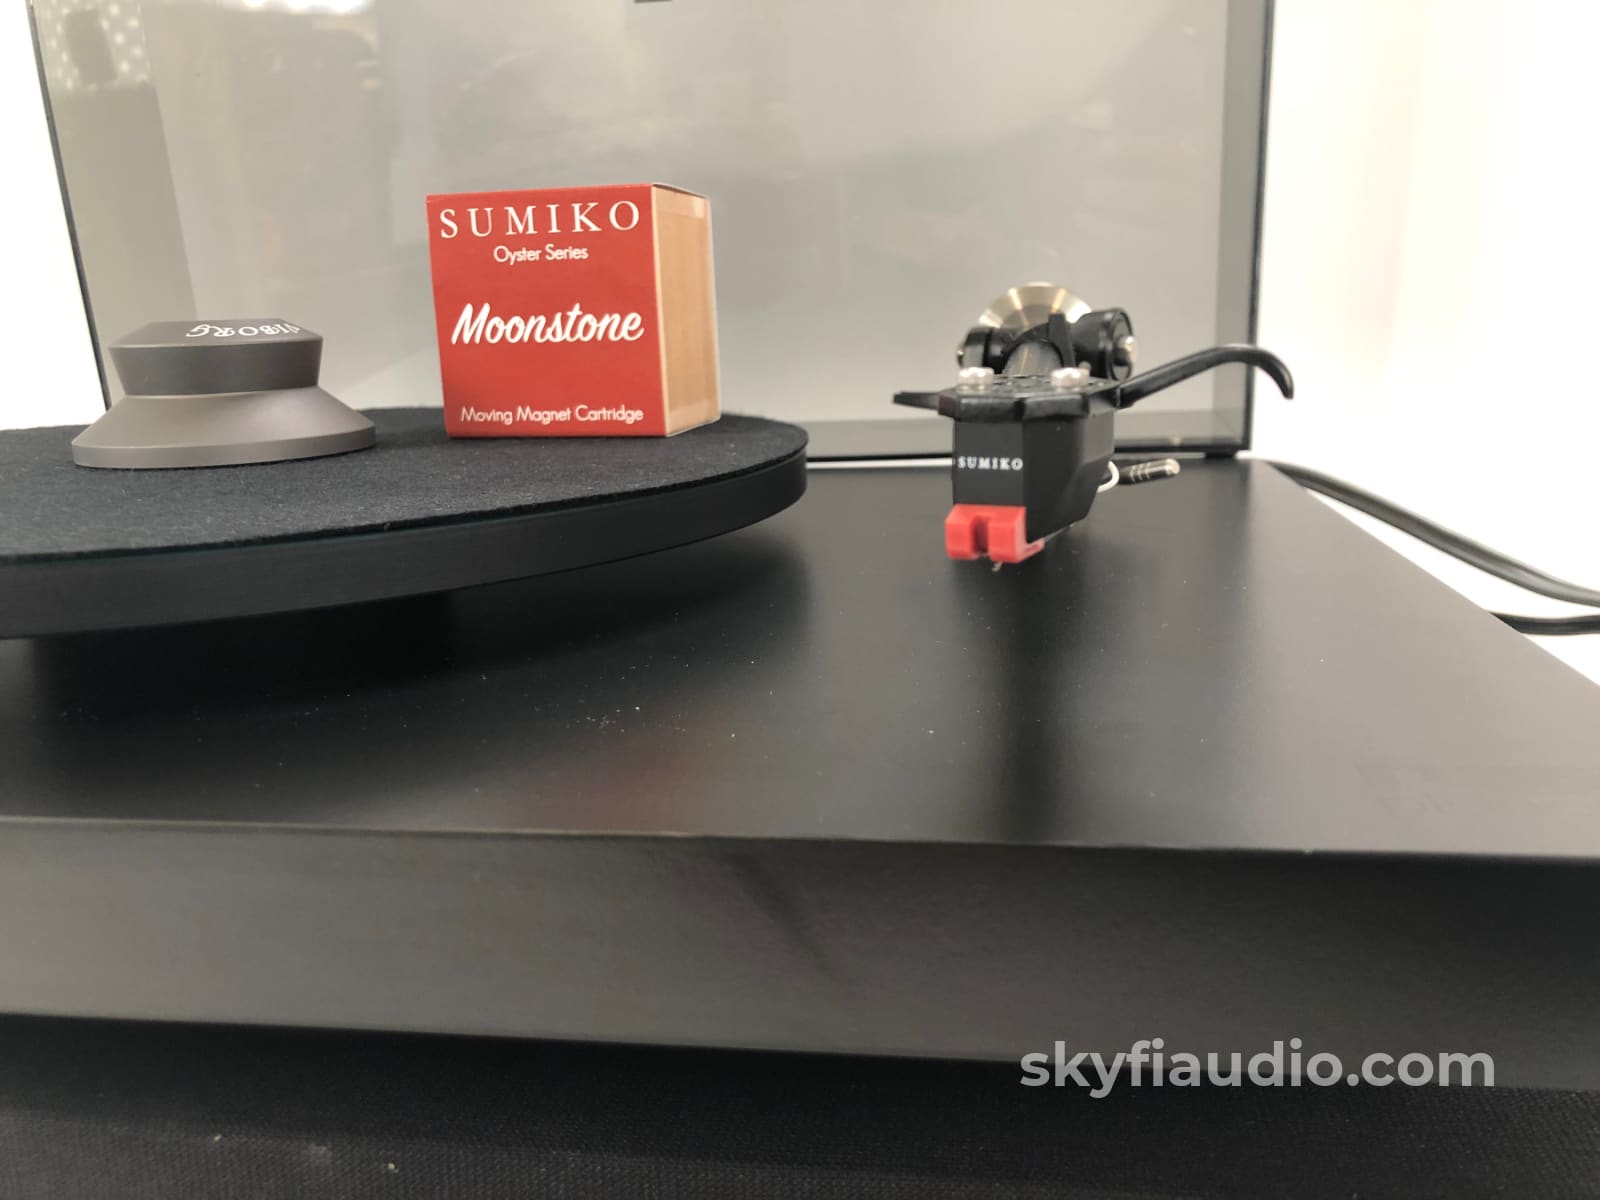 Rega Planar 3 (P3) Iconic Turntable With New Sumiko Cartridge